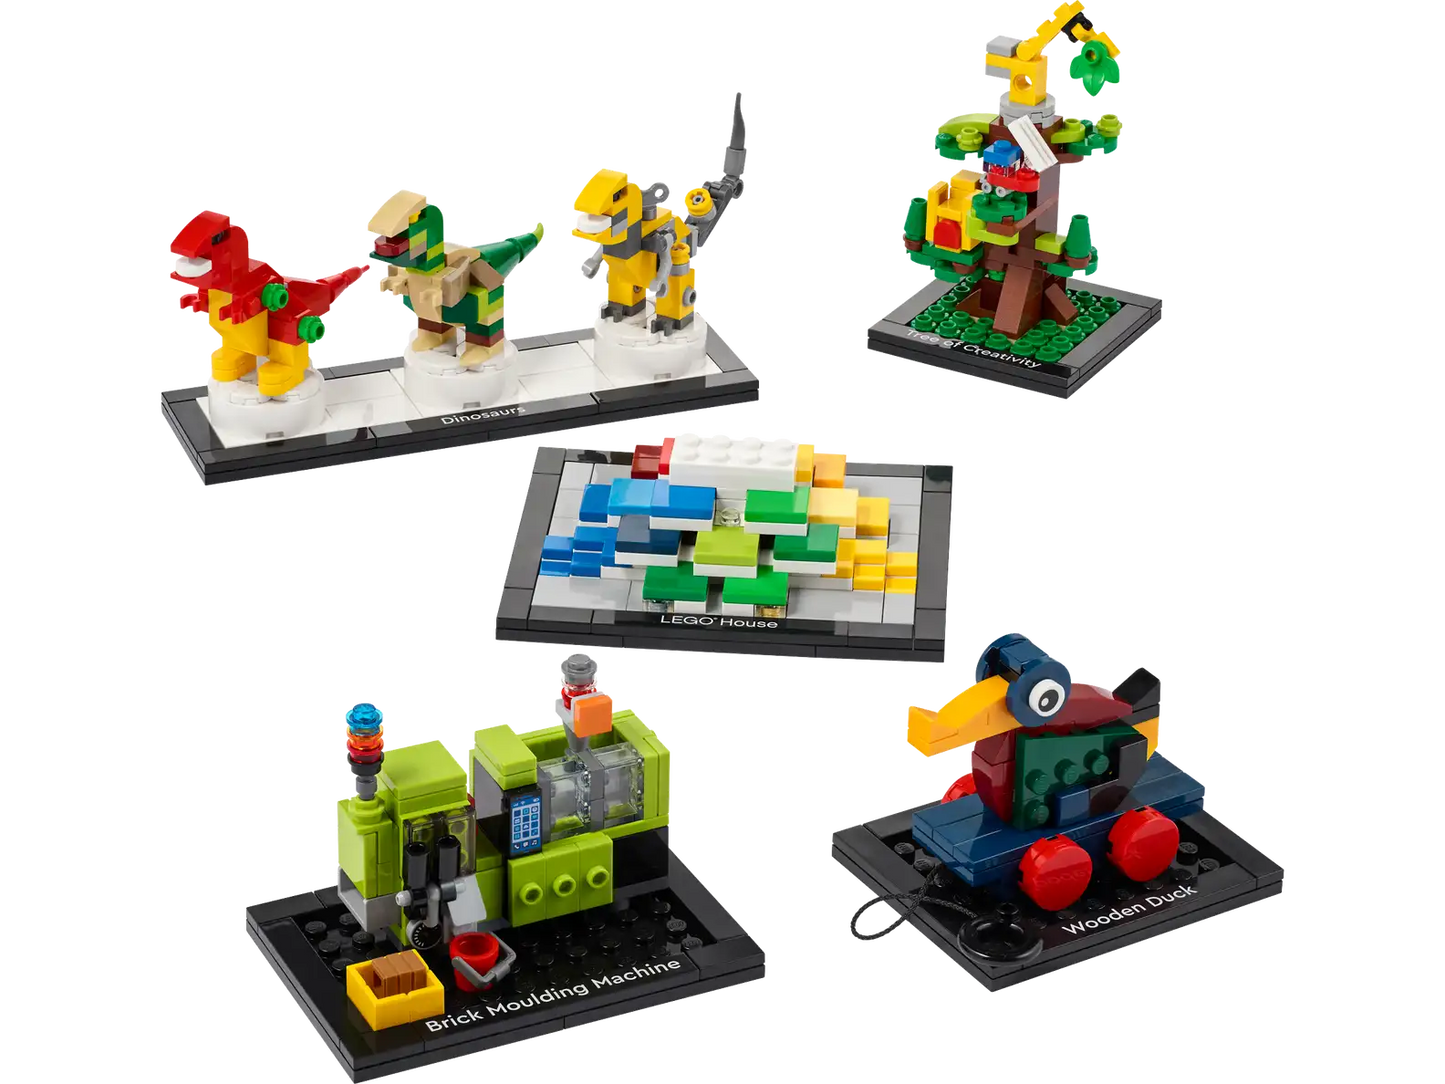 Lego Tribute 40563